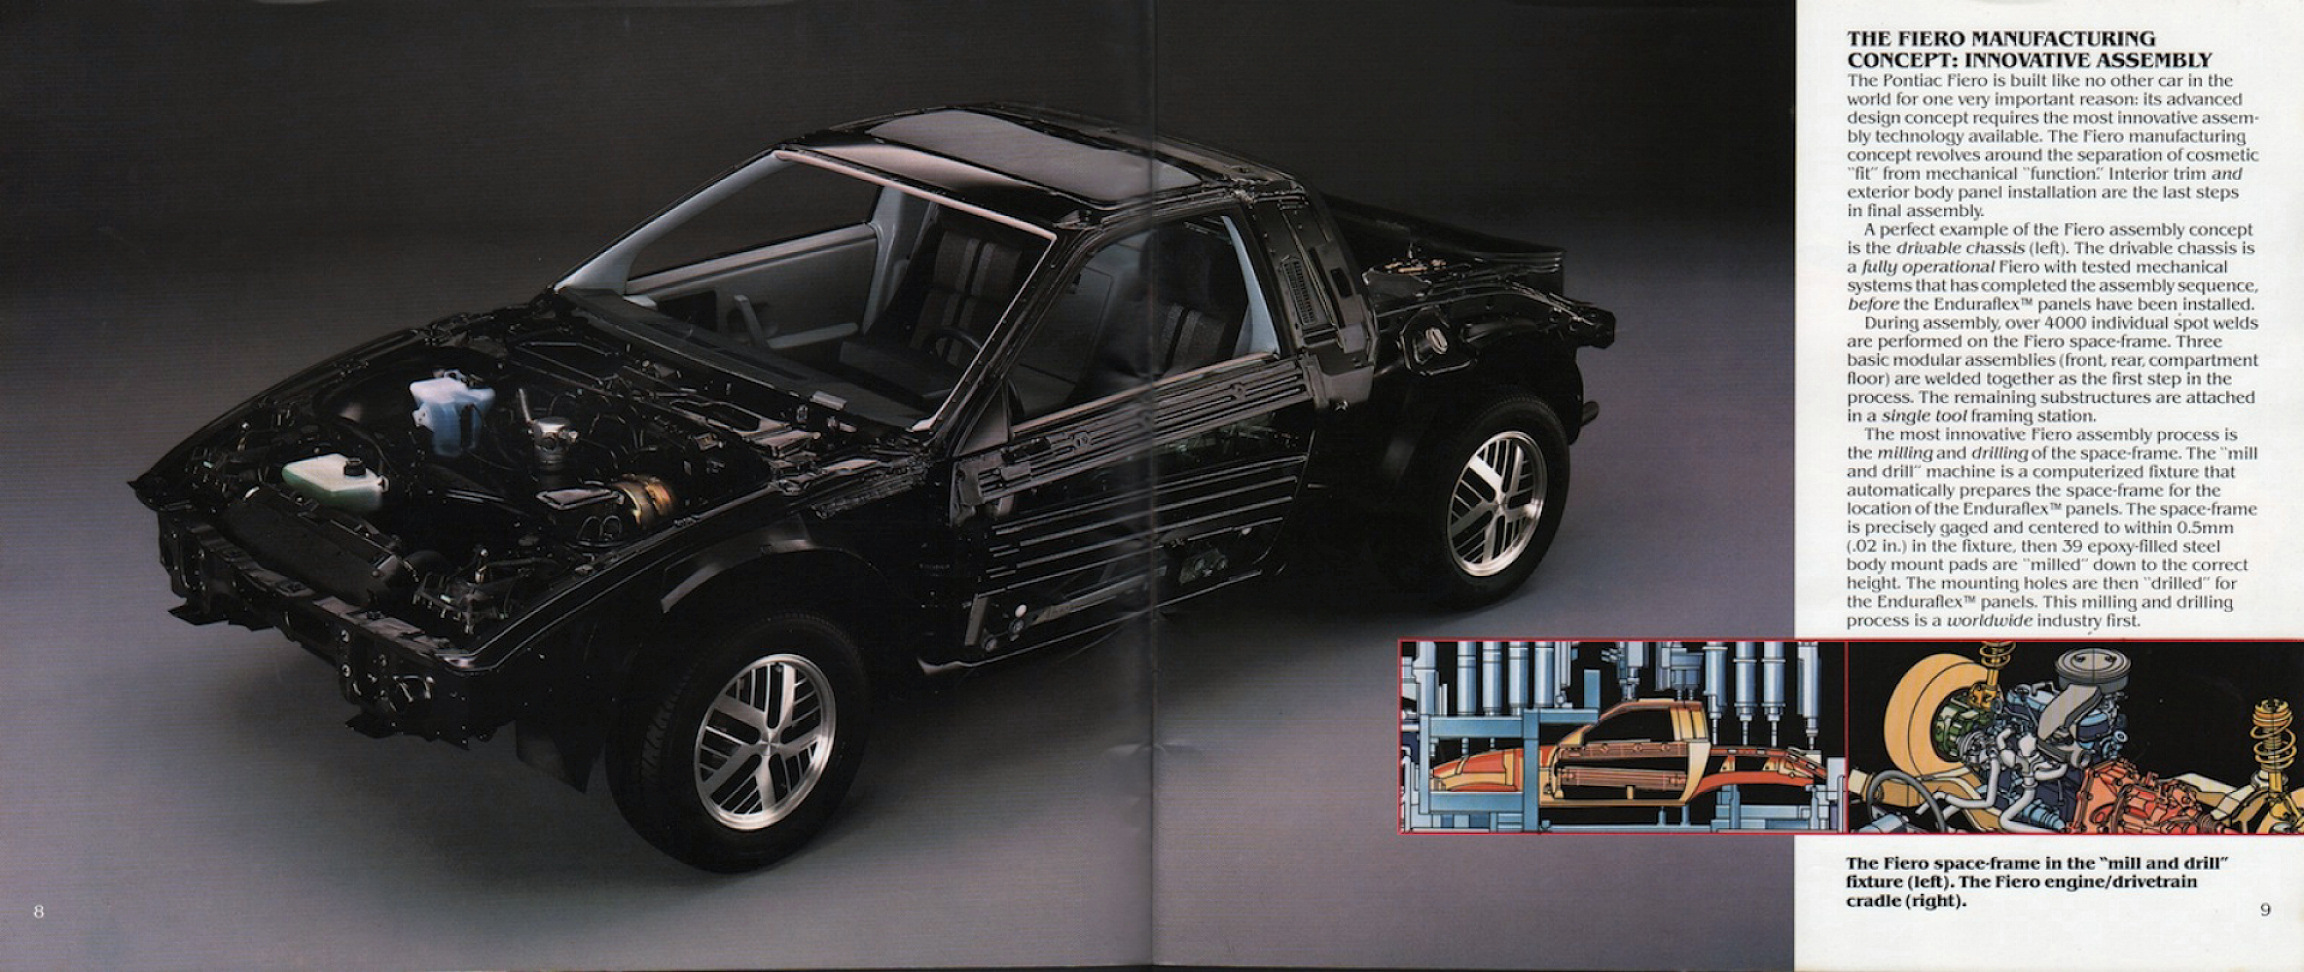 1984_Pontiac_Full_Line_Prestige-08-09